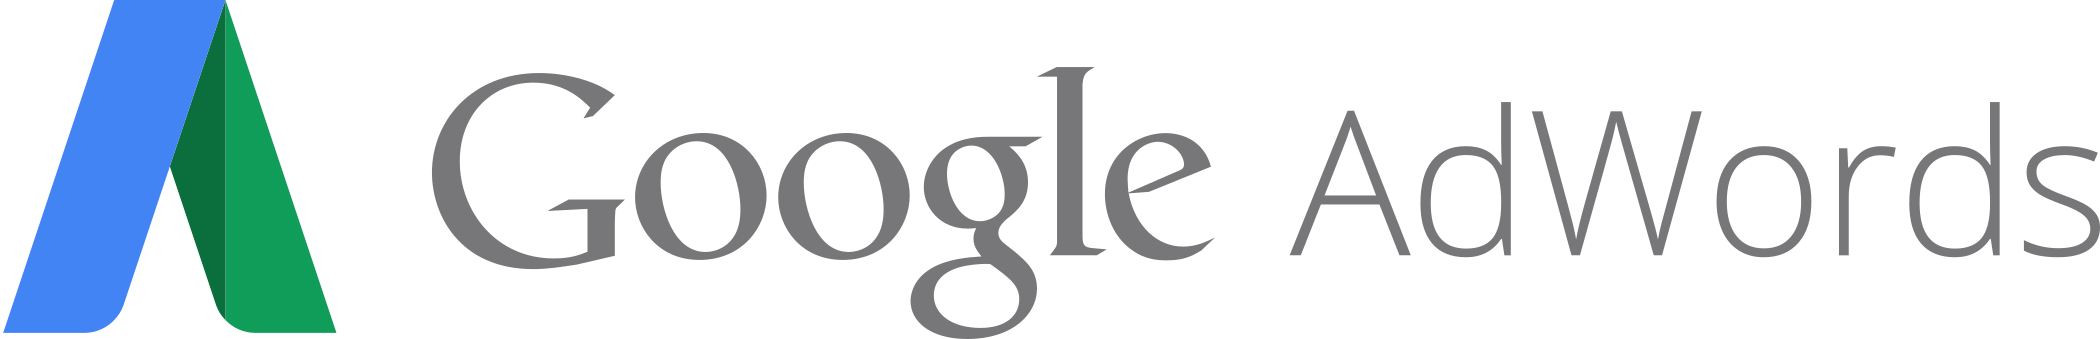 Google Adwords Logo.